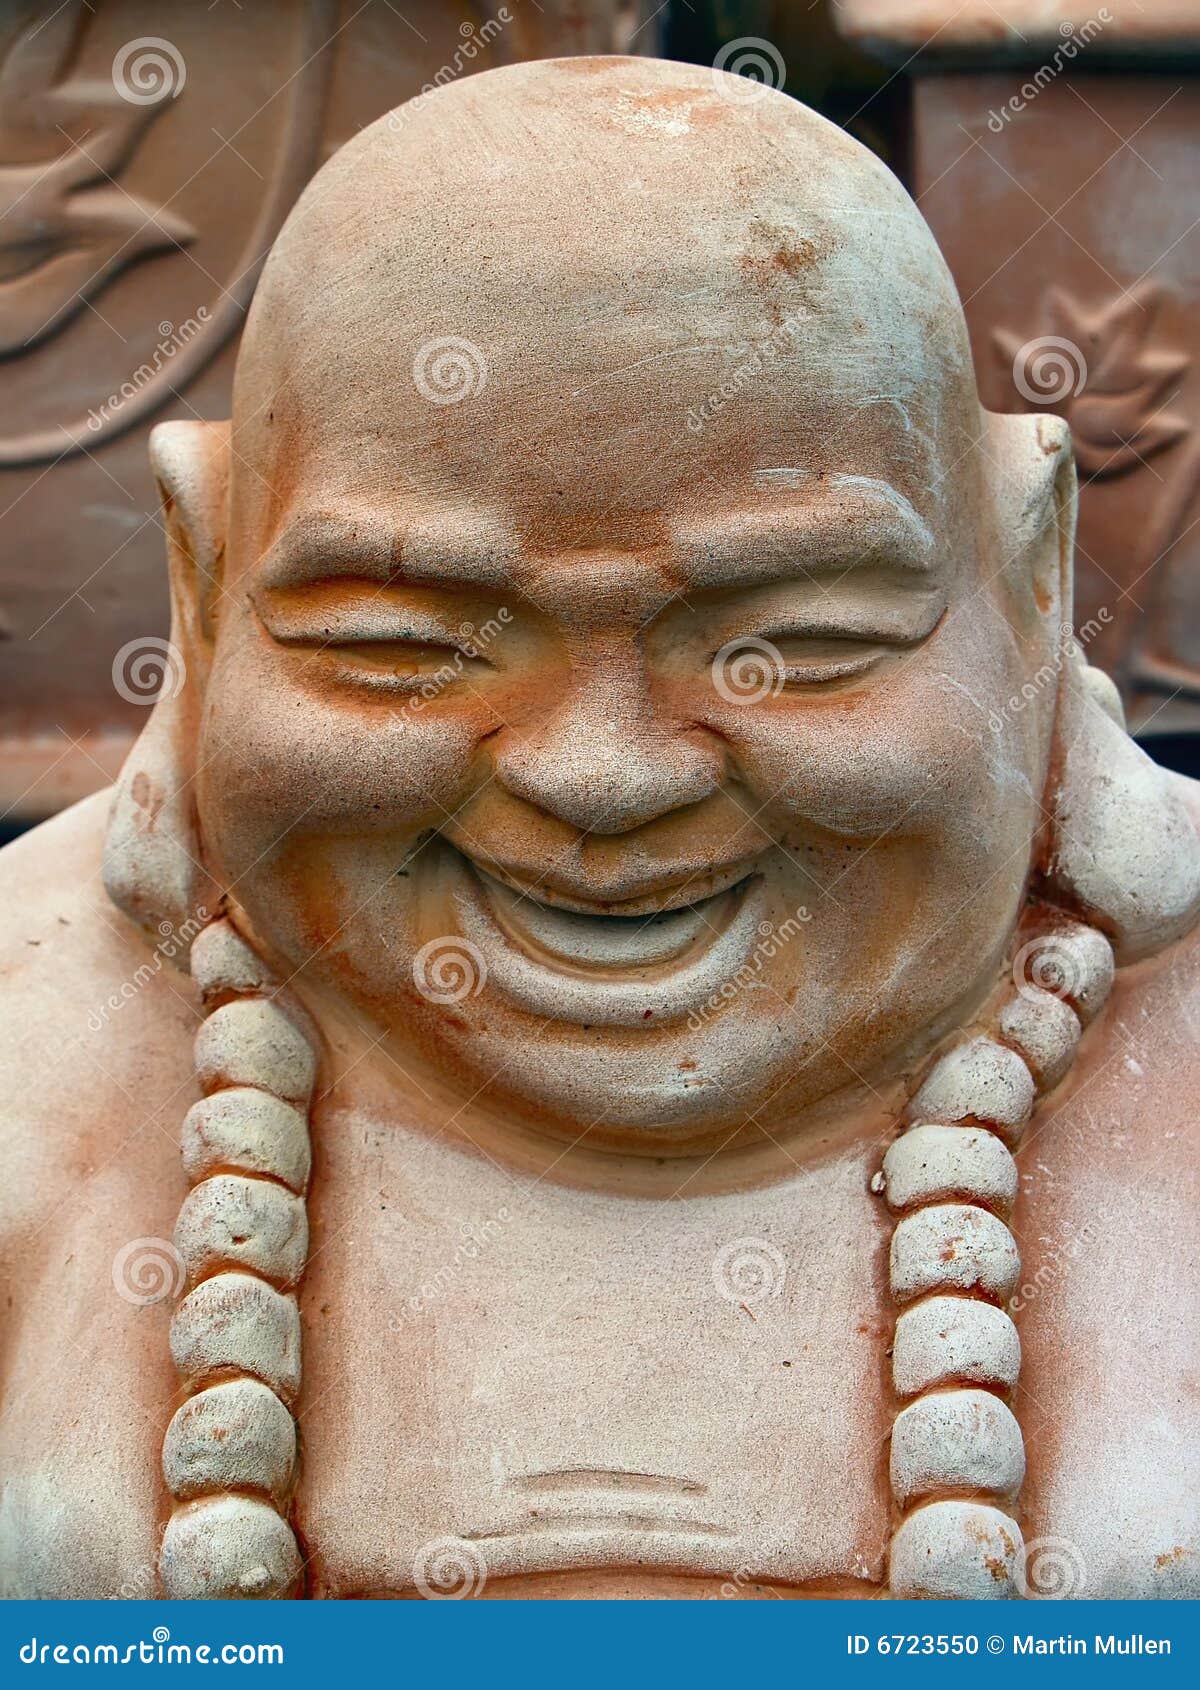 Laughing Buddha stock photo. Image of happy, laughing - 6723550